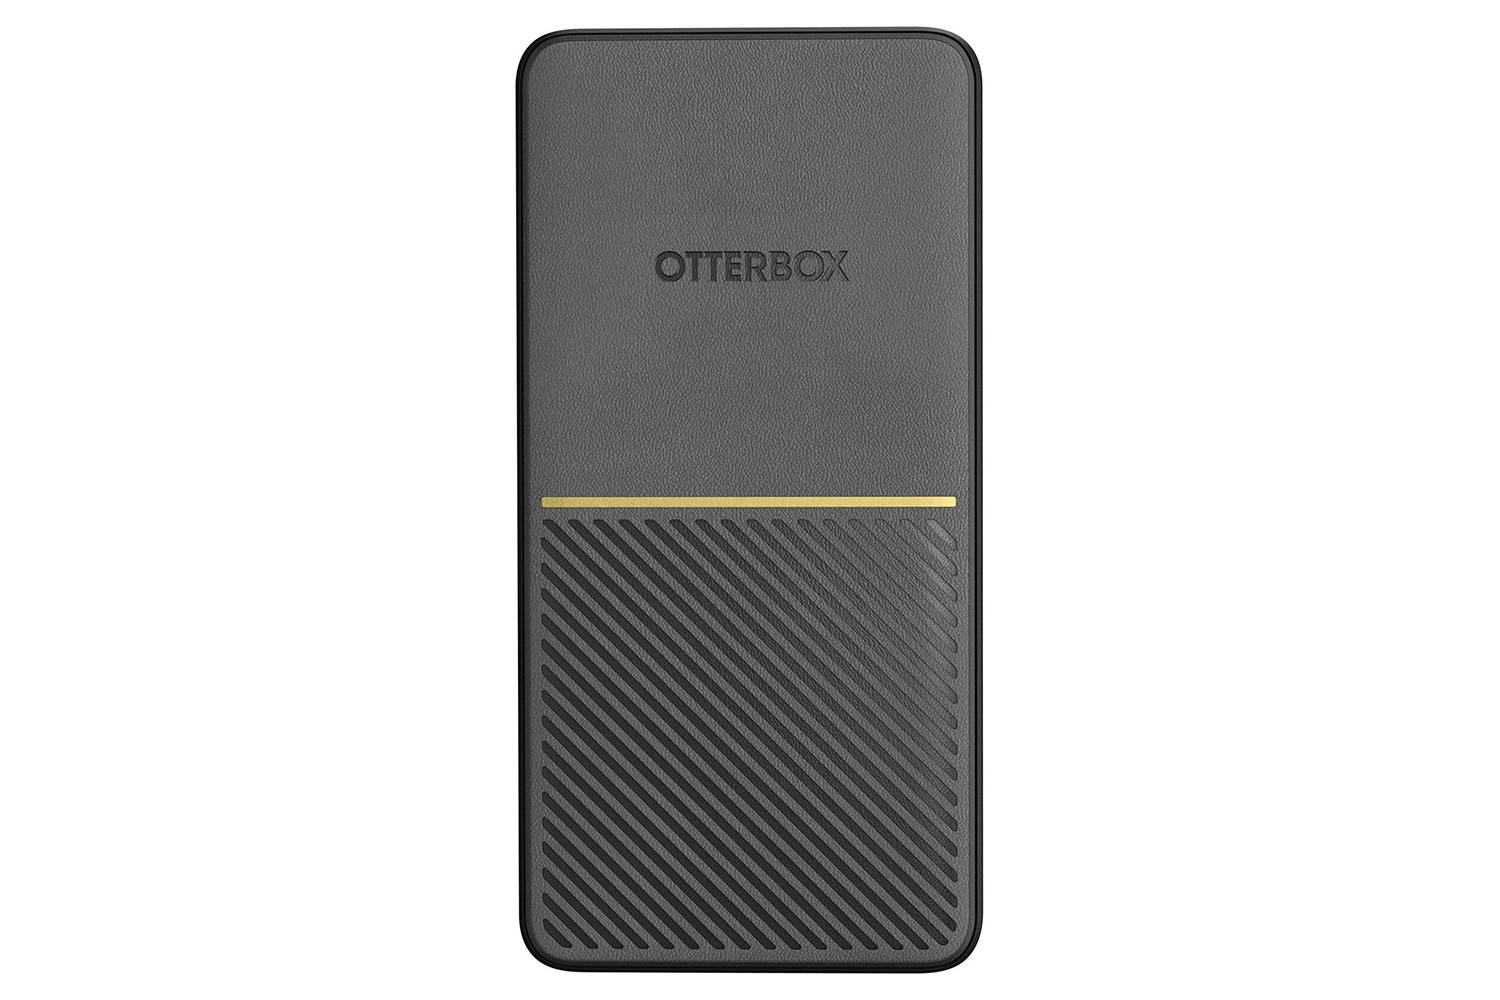 Otterbox 20000mAh Fast Charge Portable Power Bank | Twilight Black